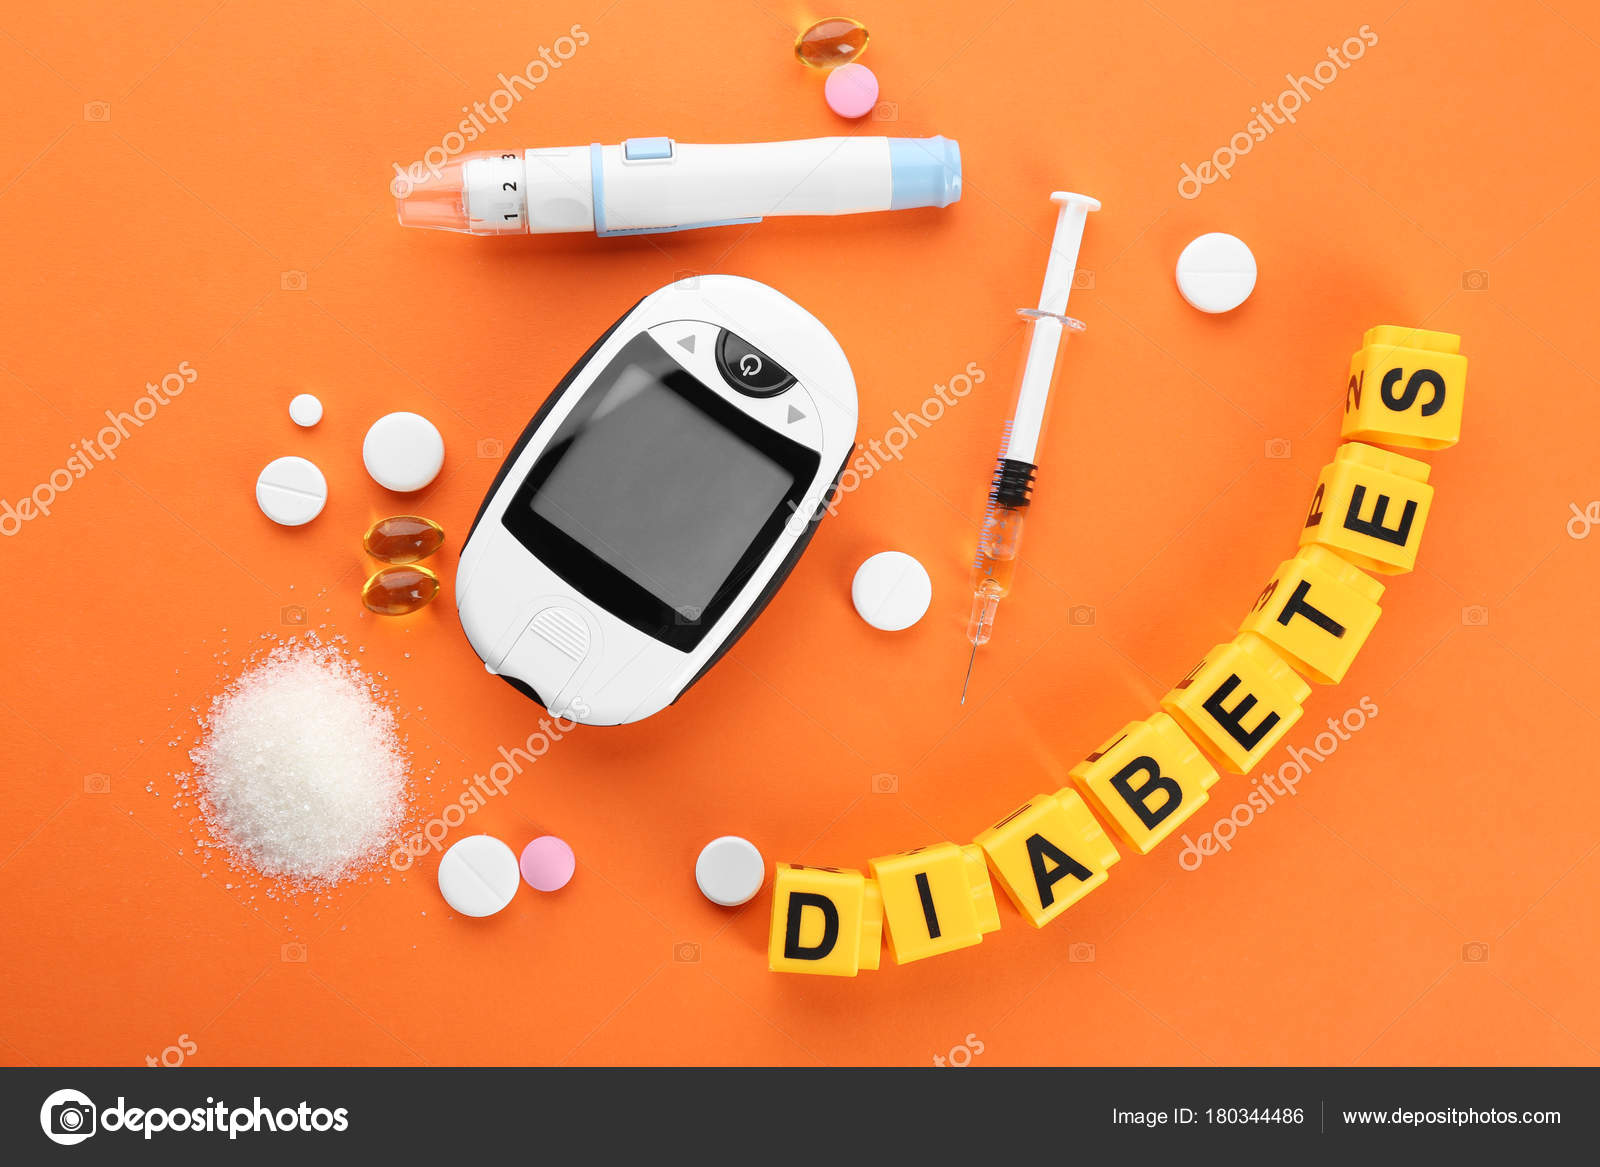 Renal diabetes insipidus jelentése magyarul » DictZone Angol-Mag…